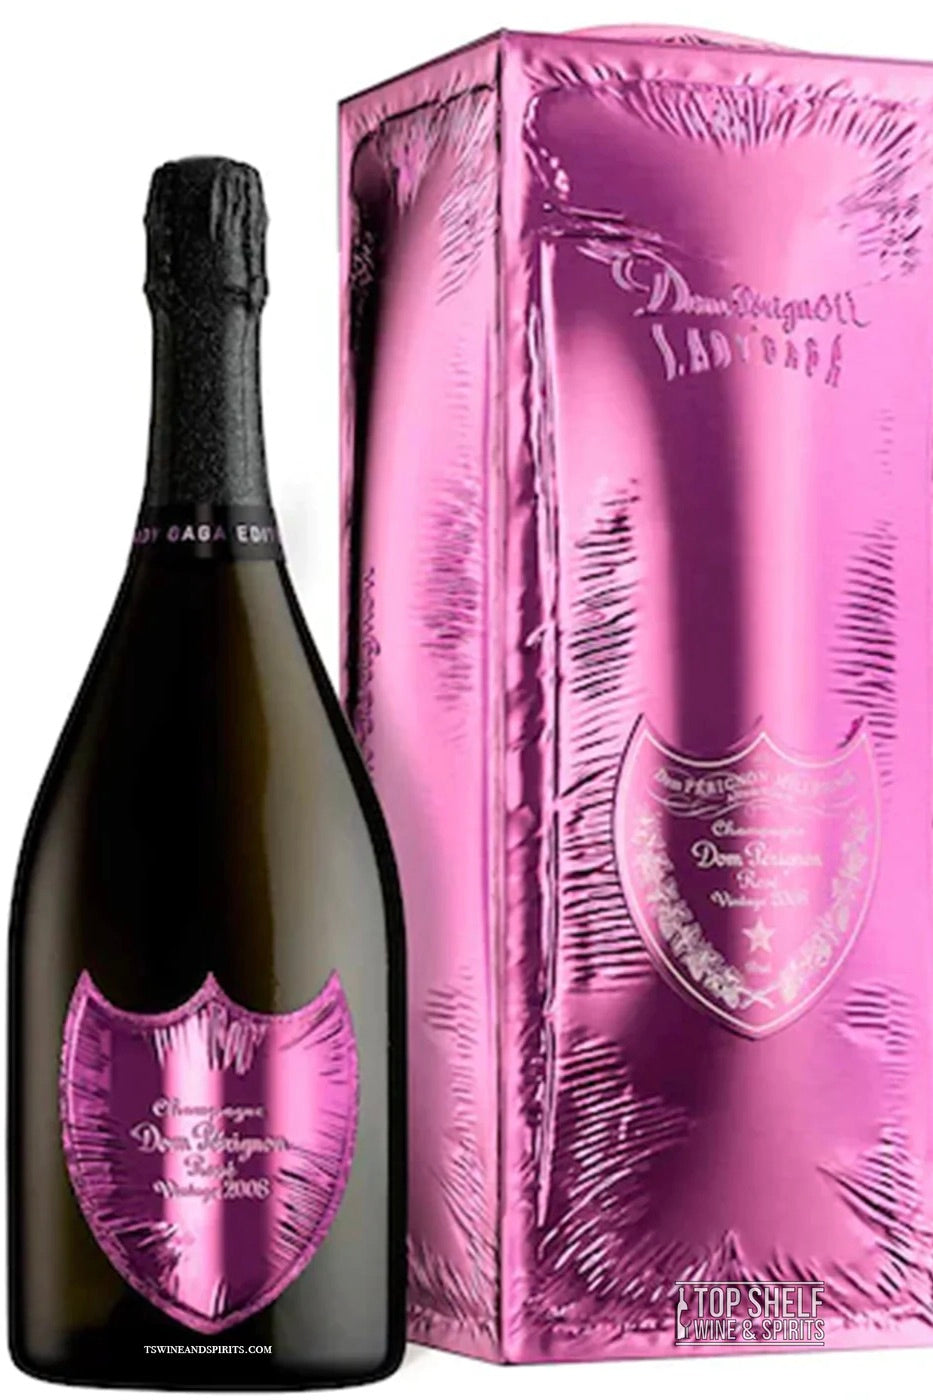 Dom Perignon Lady Gaga Edition Vintage 2008 Rose Champagne Blackwell's Wines & Spirits